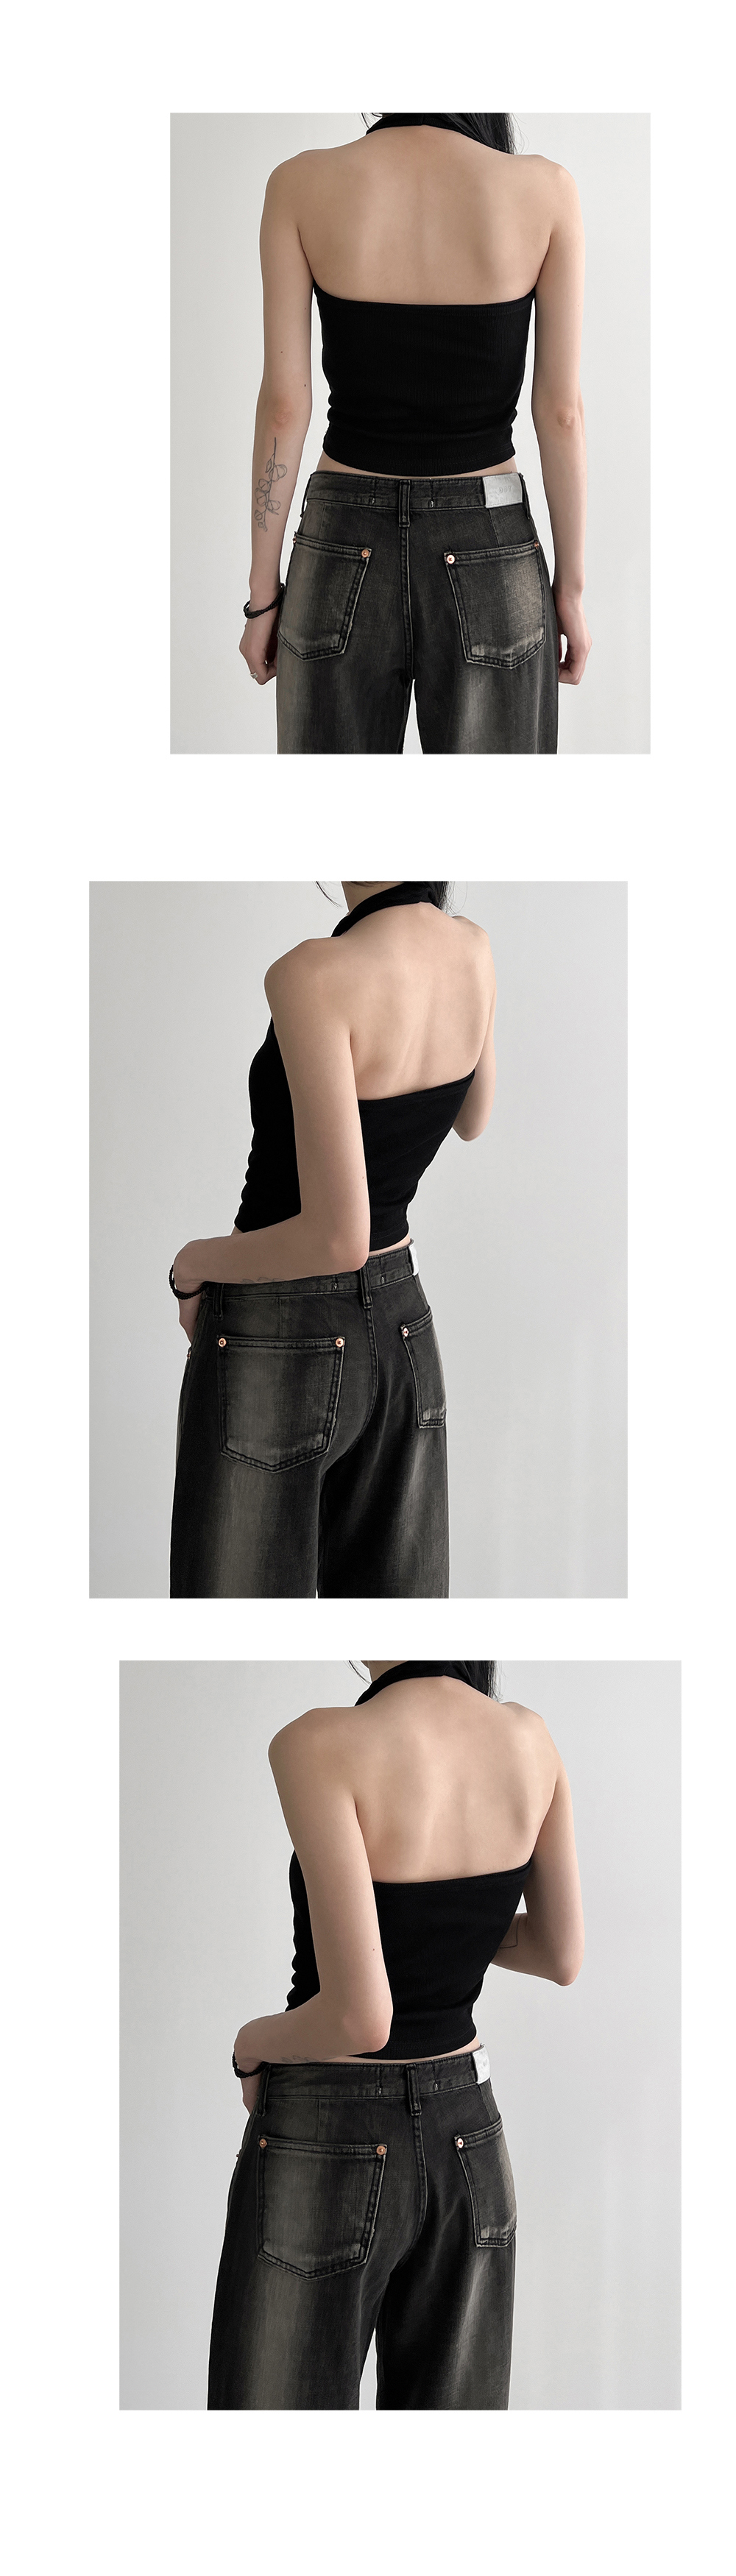 blouse model image-S1L14